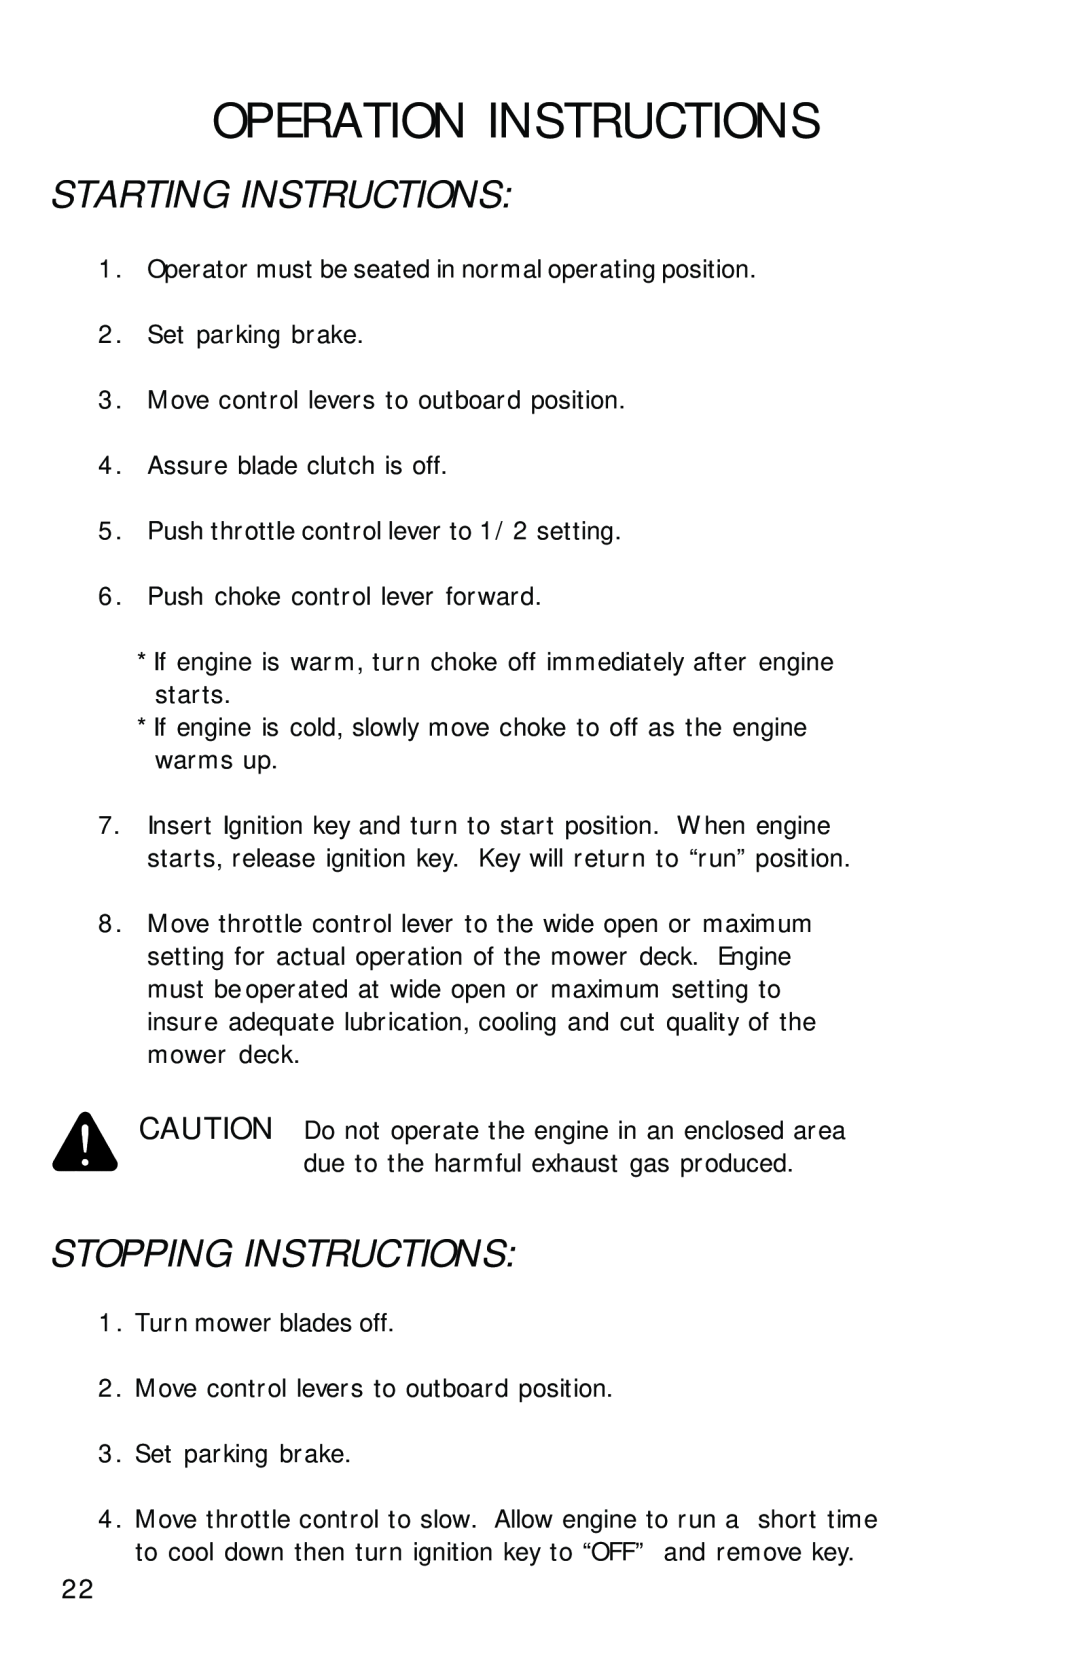 Dixon ZTR 2700, 12828-0603 manual Starting Instructions, Stopping Instructions, Operation Instructions 